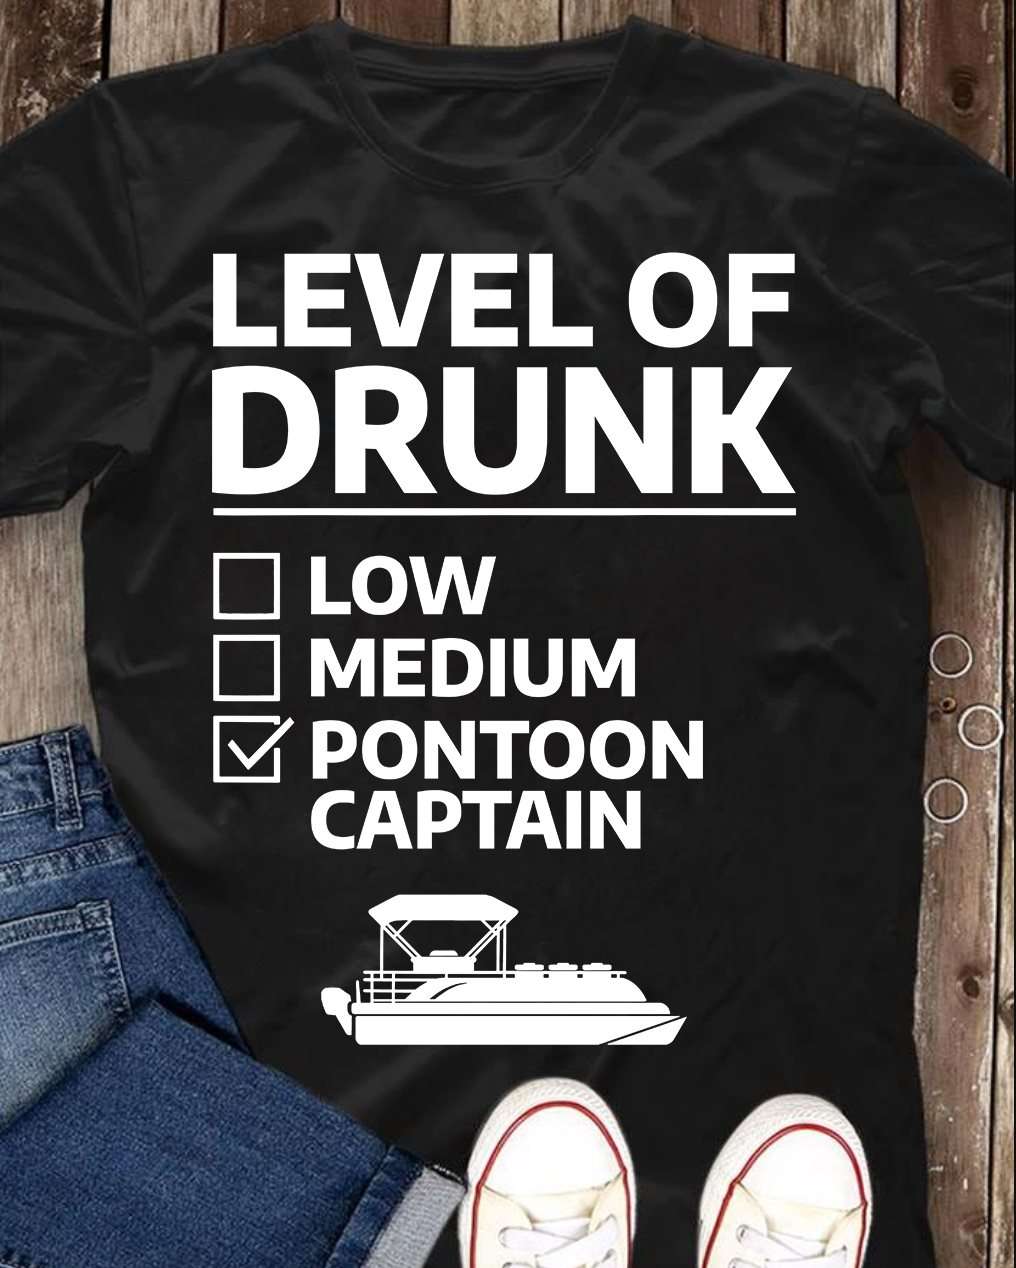 Level of drunk - Low Medium Pontoon Captain